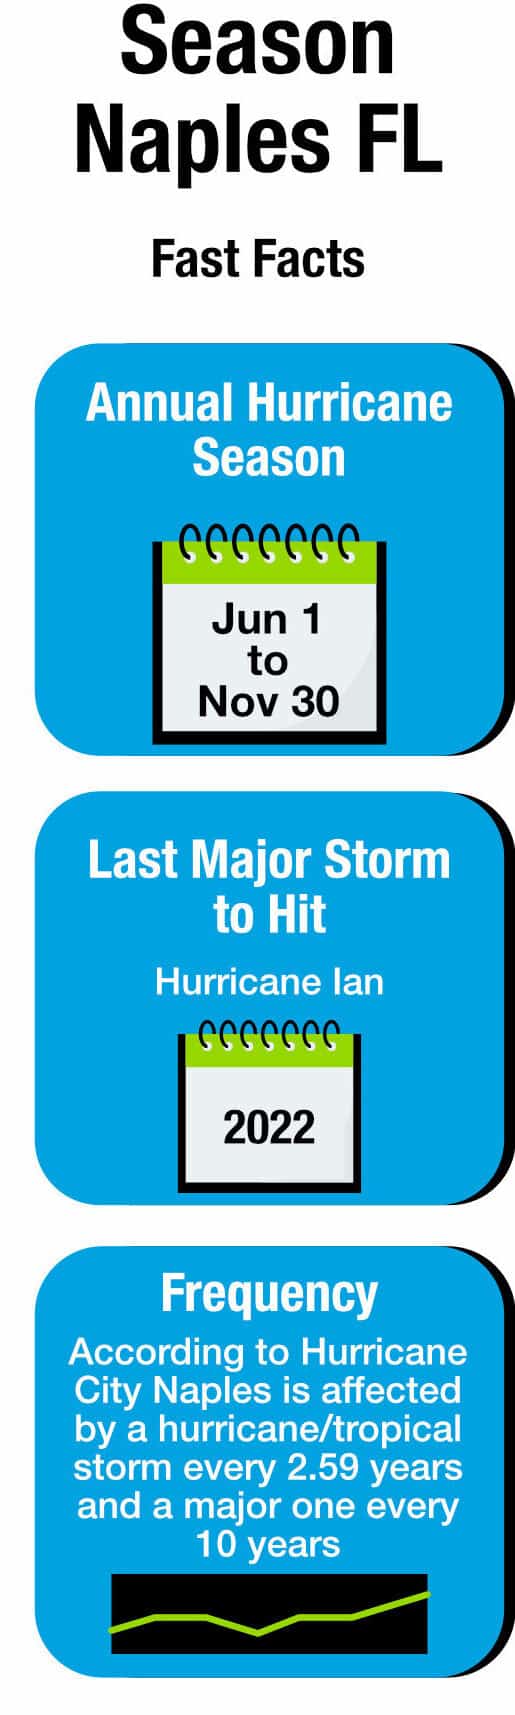 hurricane season Naples FL fast facts 